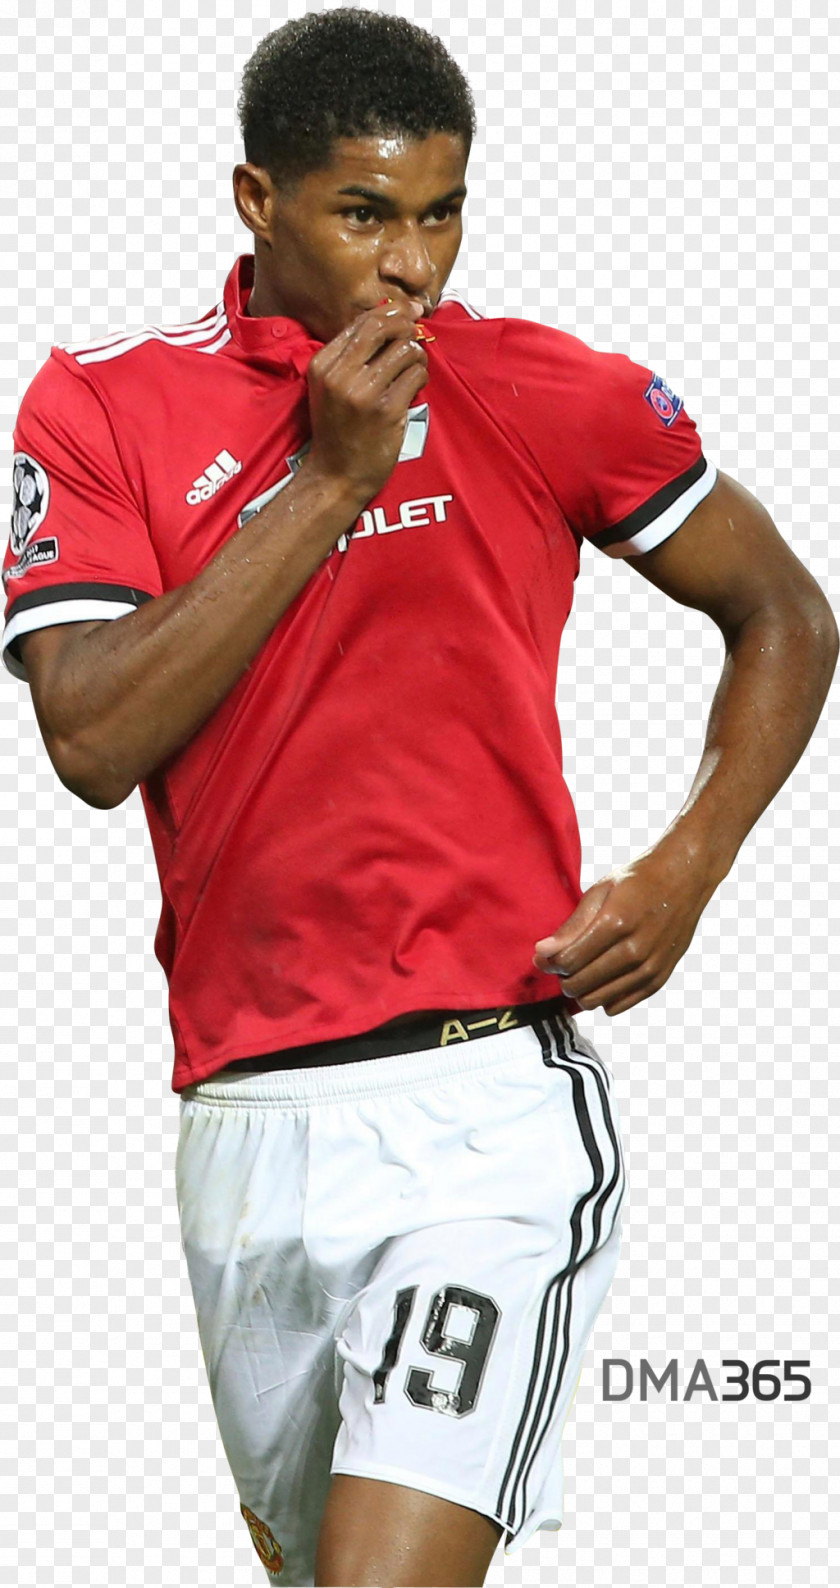 Football Marcus Rashford Manchester United F.C. England National Team PNG